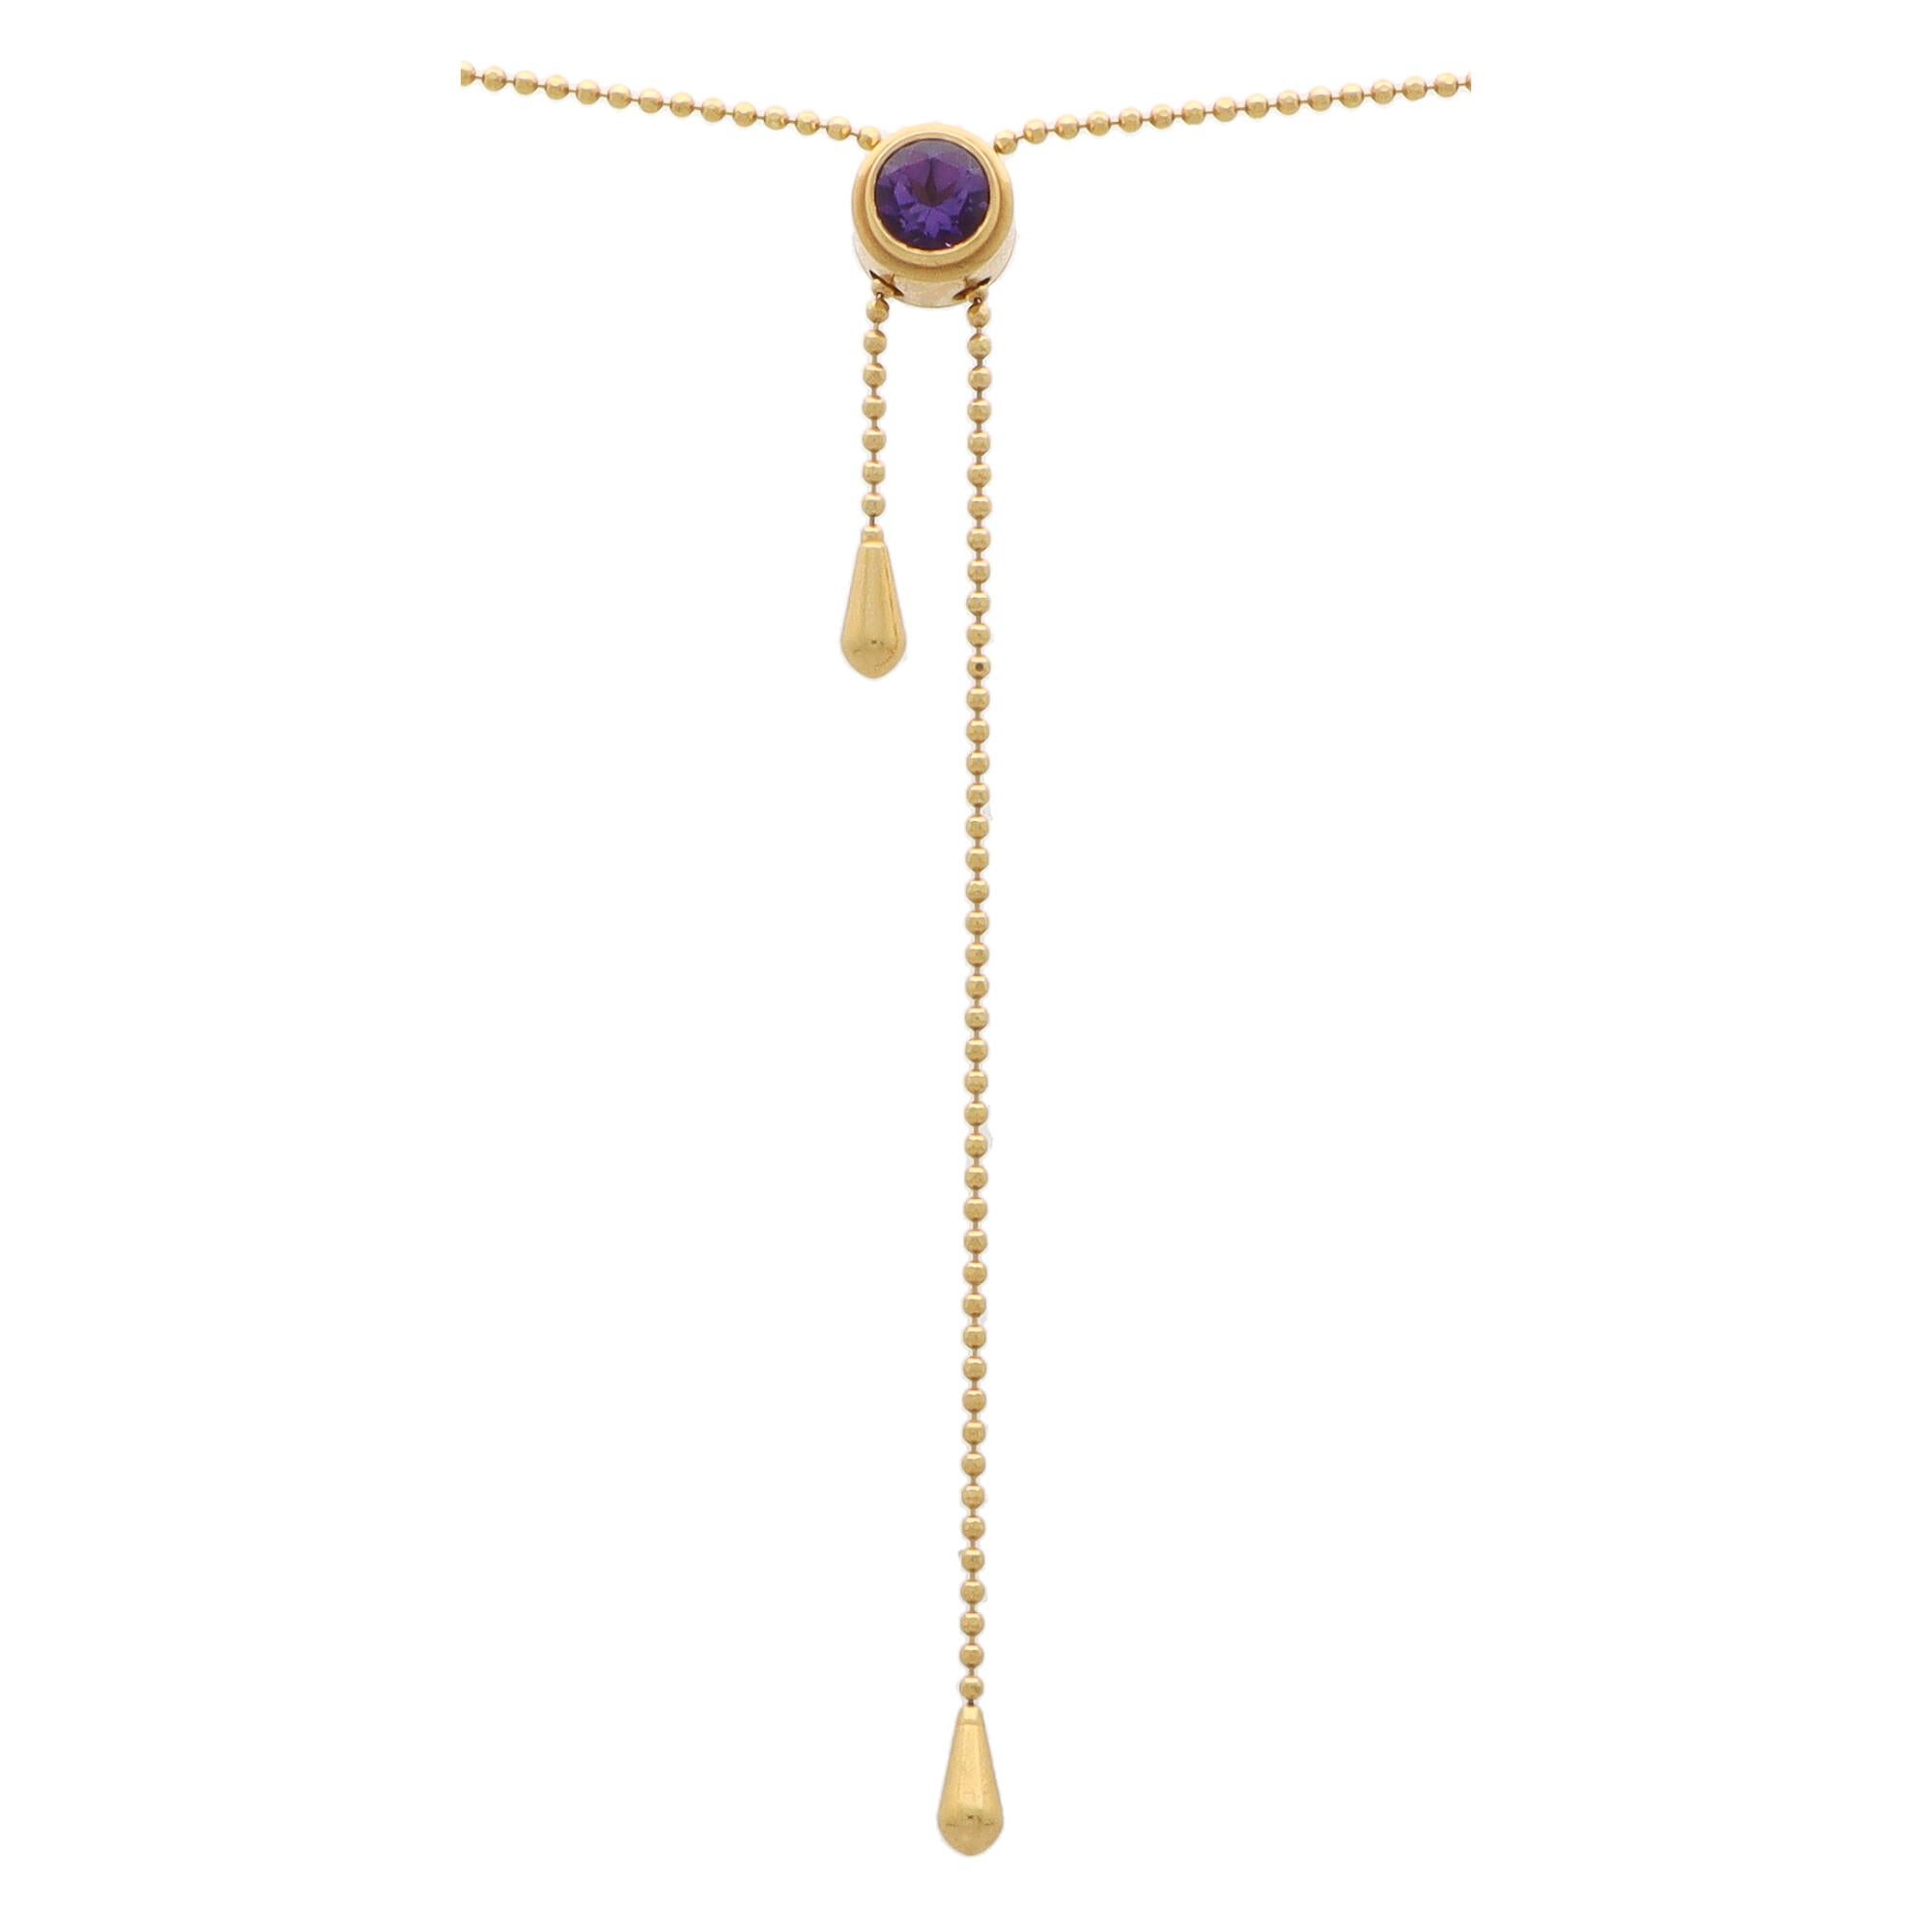 Retro Vintage Italian Amethyst Adjustable Tassel Necklace Set in 14k Yellow Gold For Sale